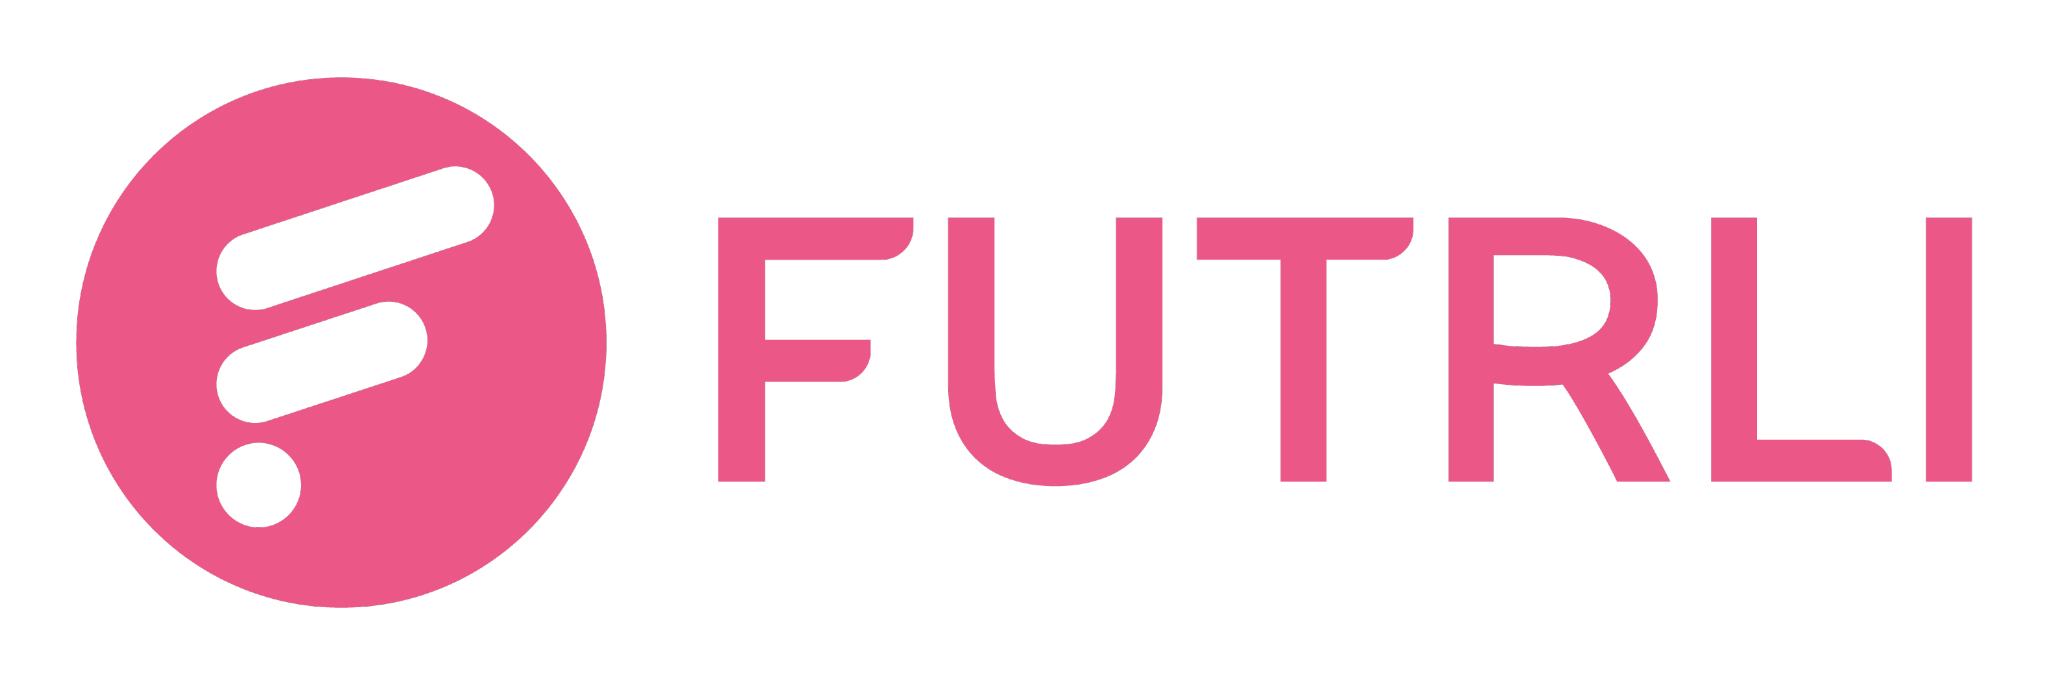 FUTRLI logo.png